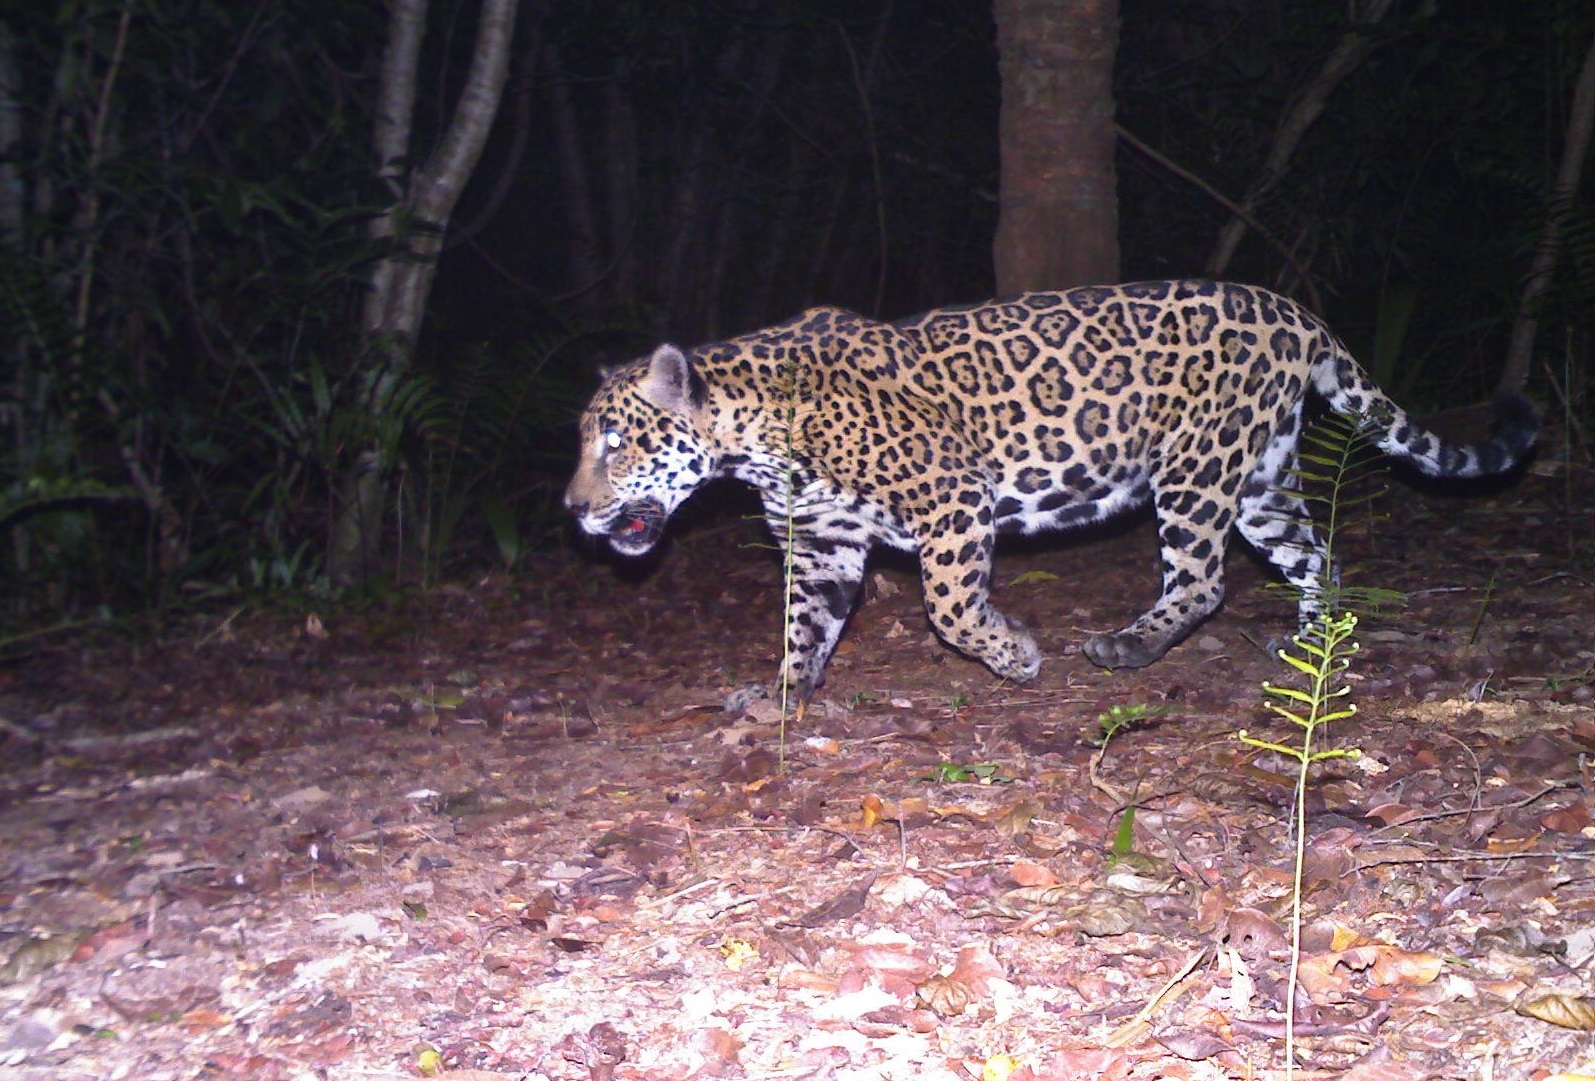 Blanca the jaguar